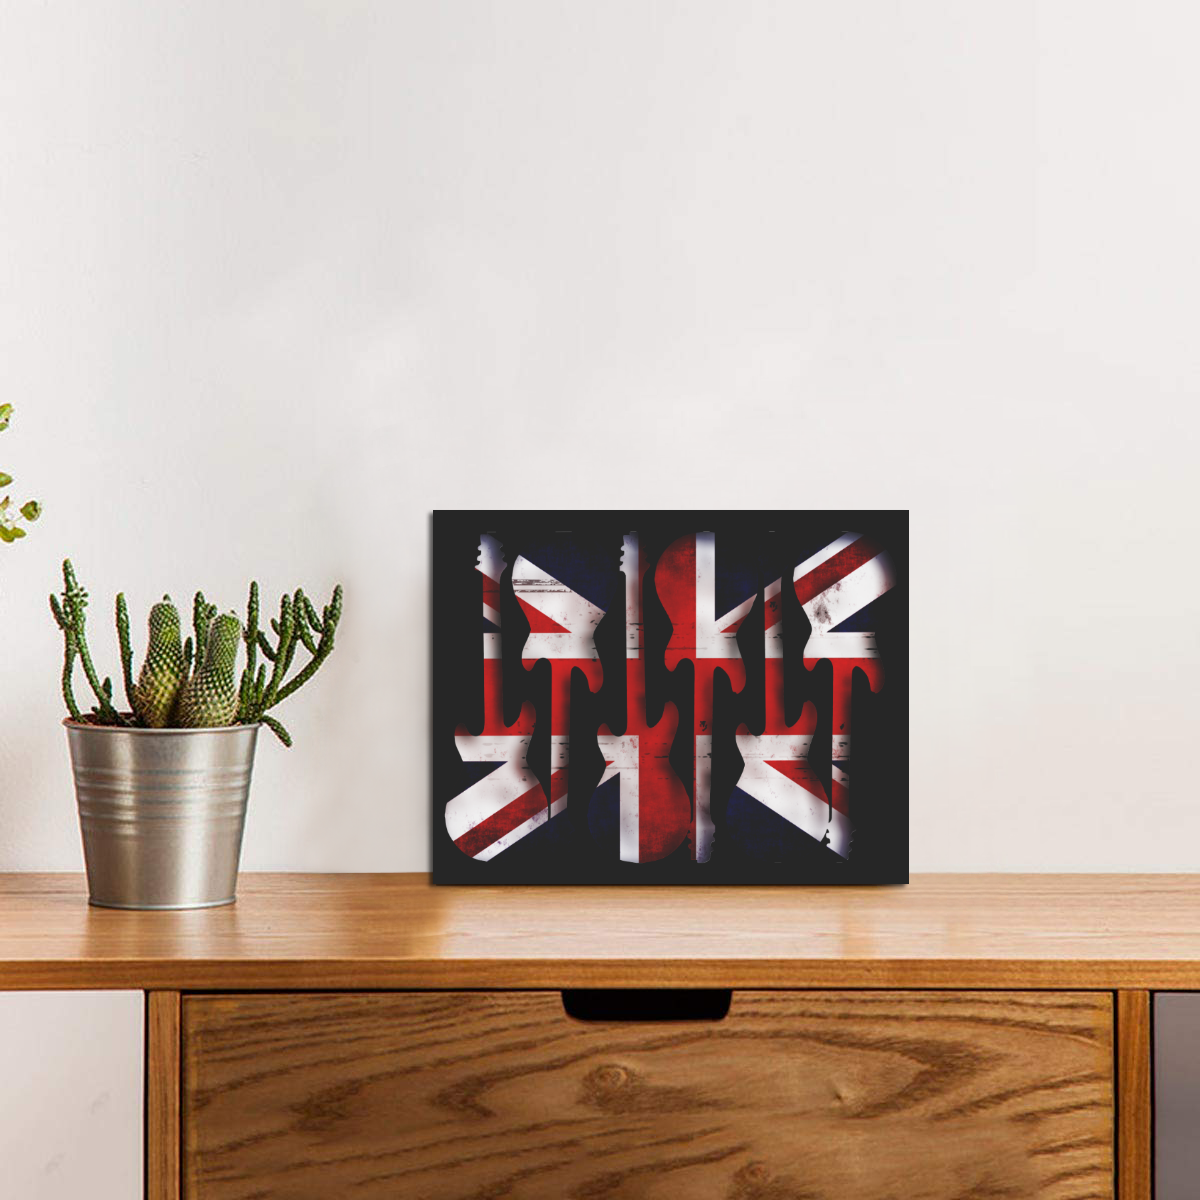 Union Jack British UK Flag Guitars Black Photo Panel for Tabletop Display 8"x6"